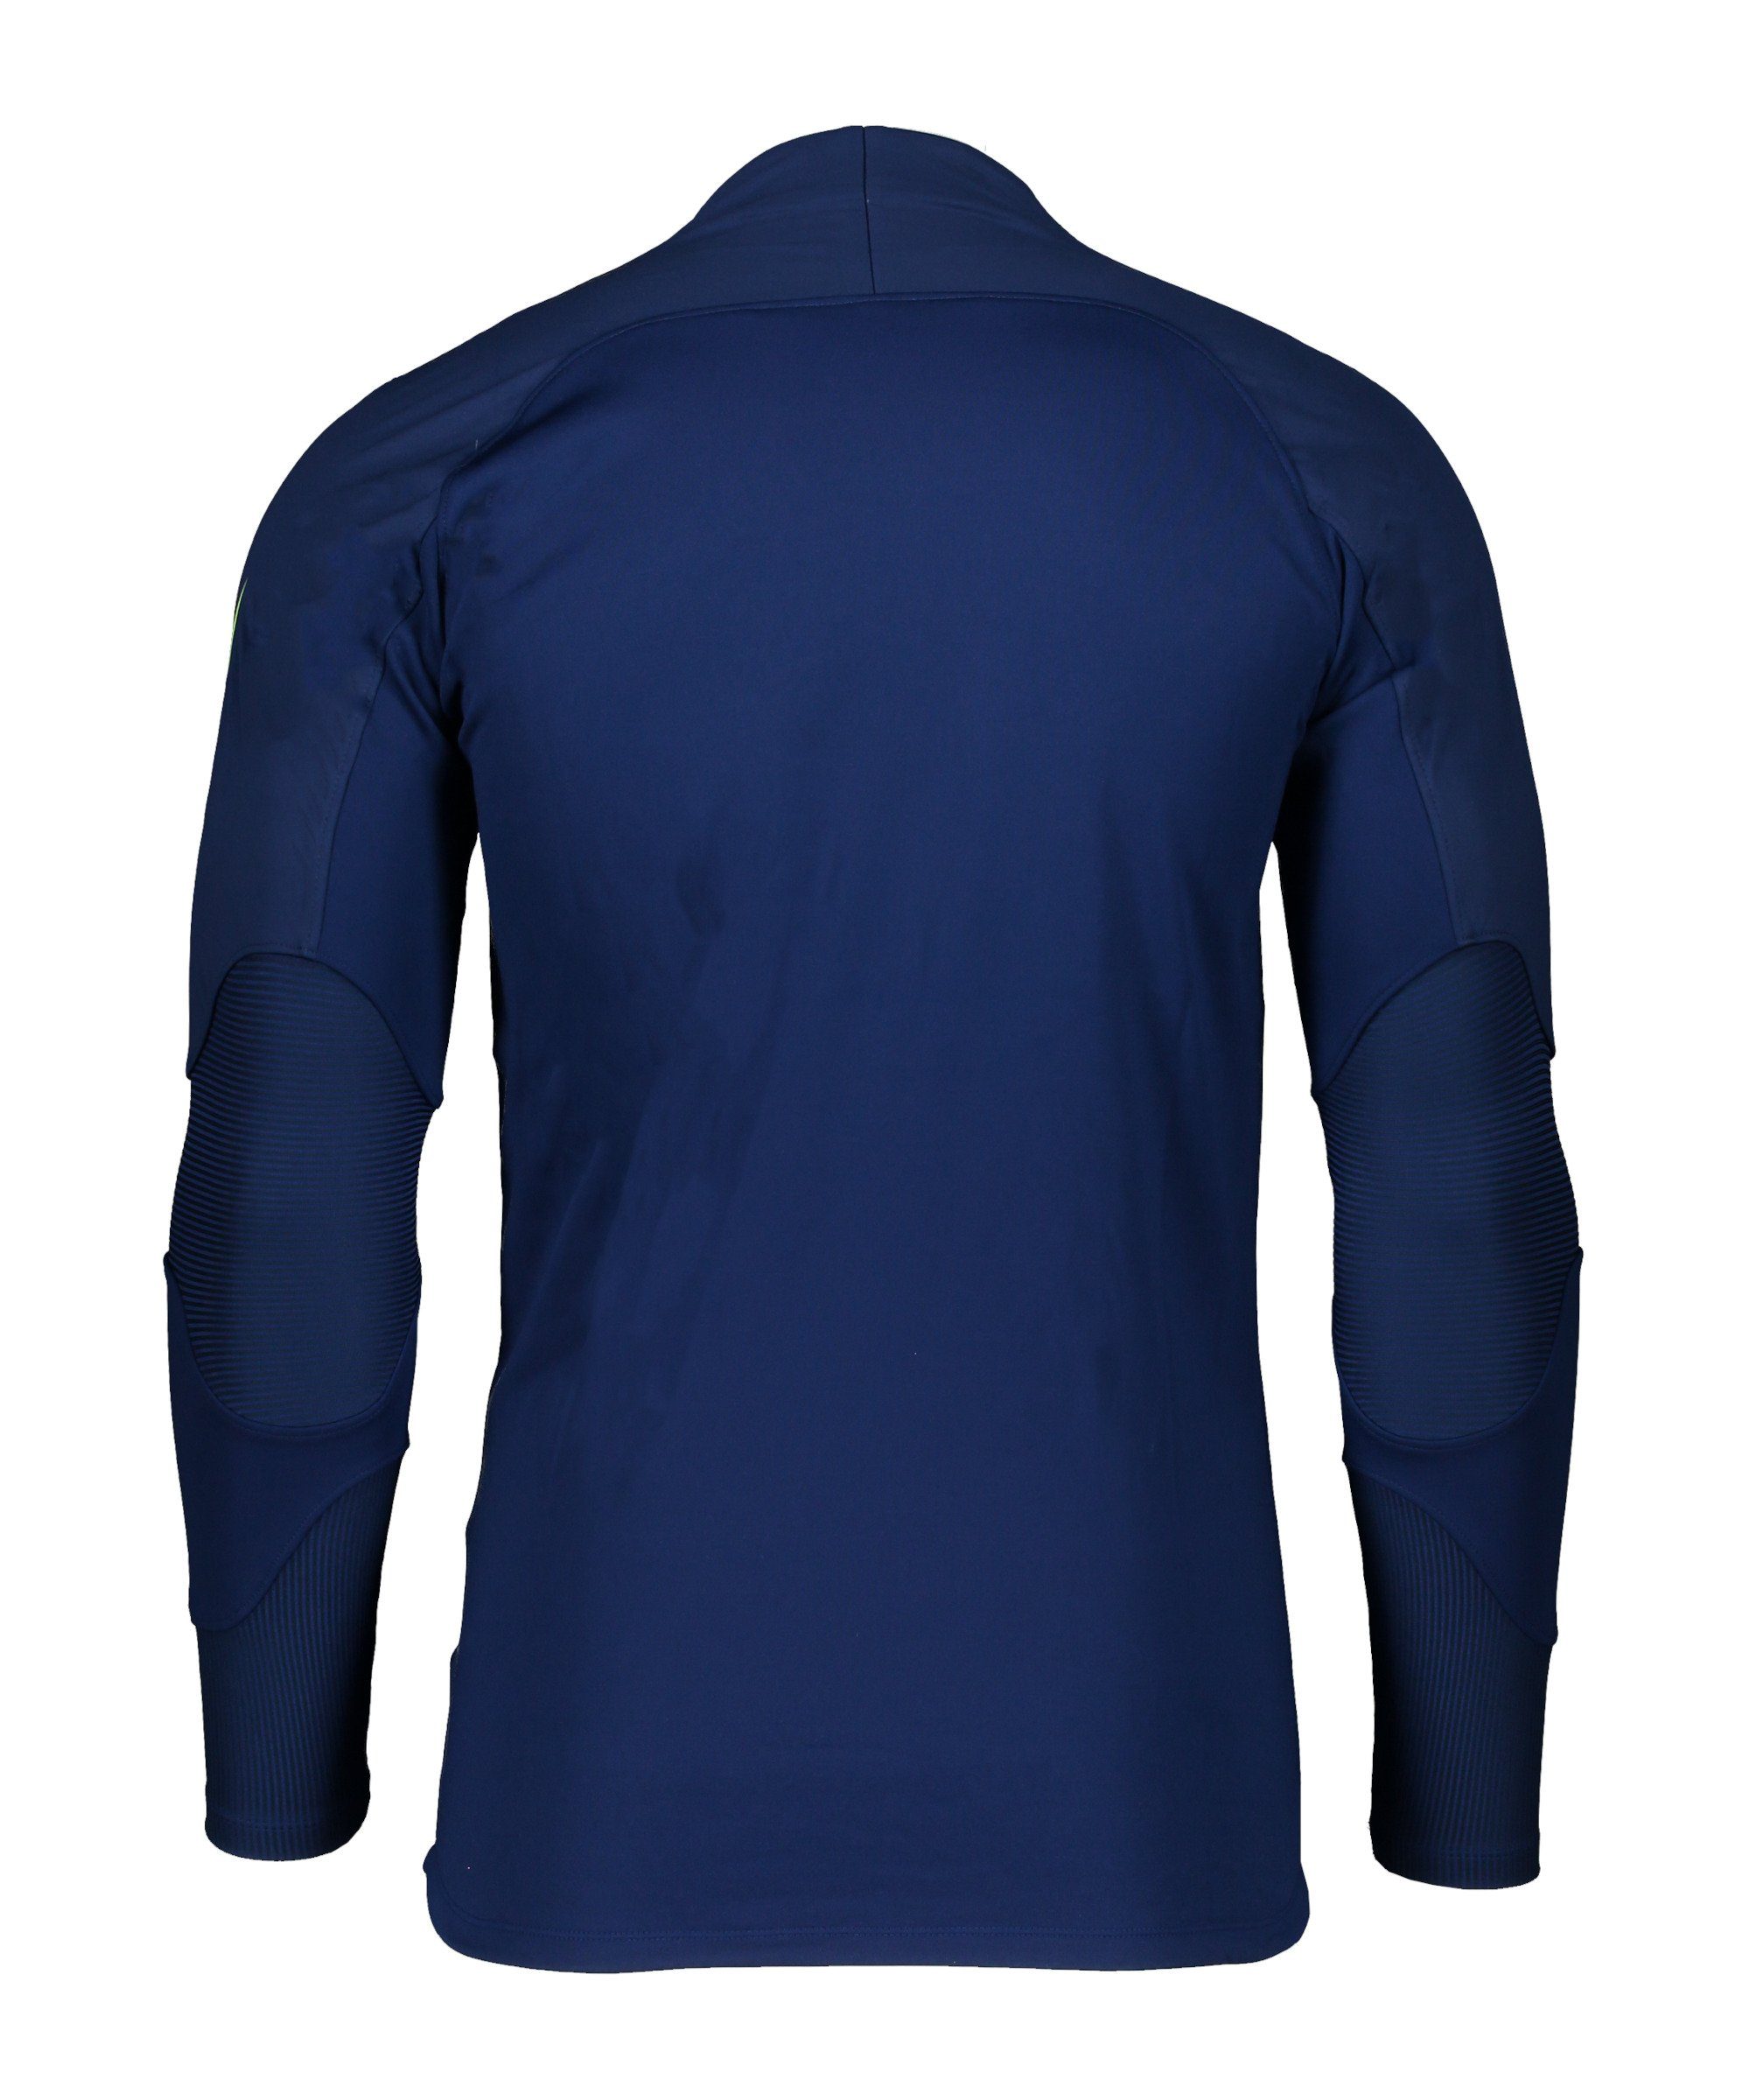 Winter Sweater blau Therma-FIT Strike Sweatshirt Nike